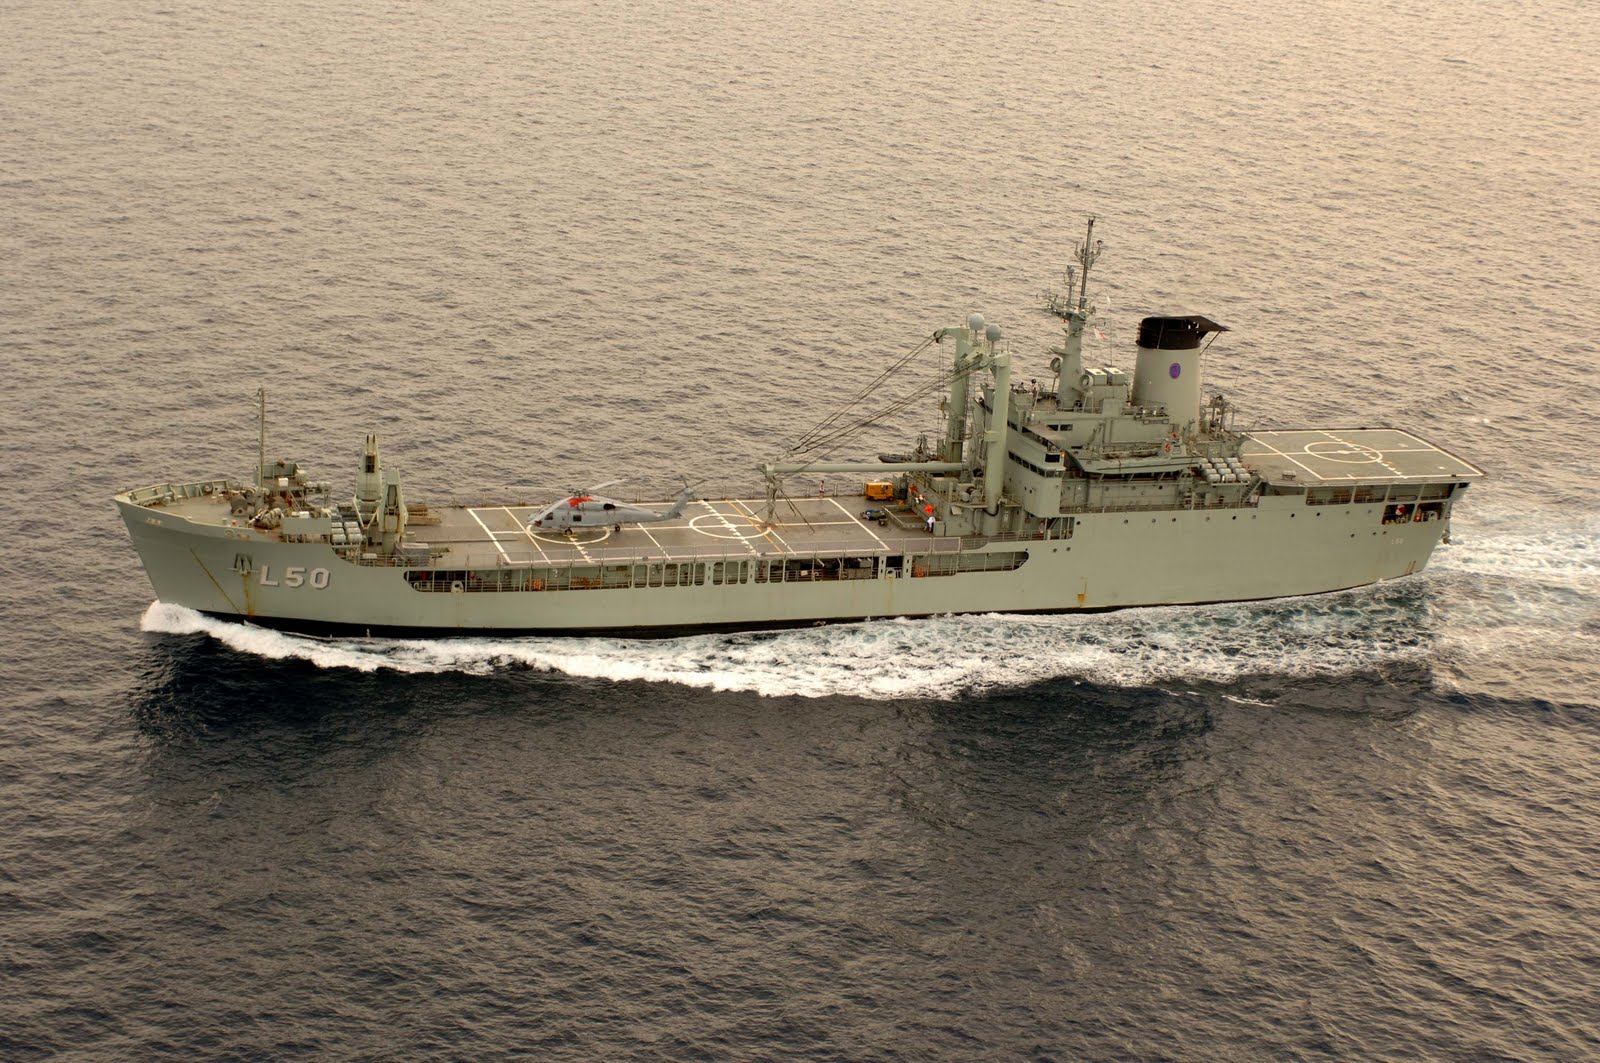 HMAS Tobruk (L50) Backgrounds on Wallpapers Vista